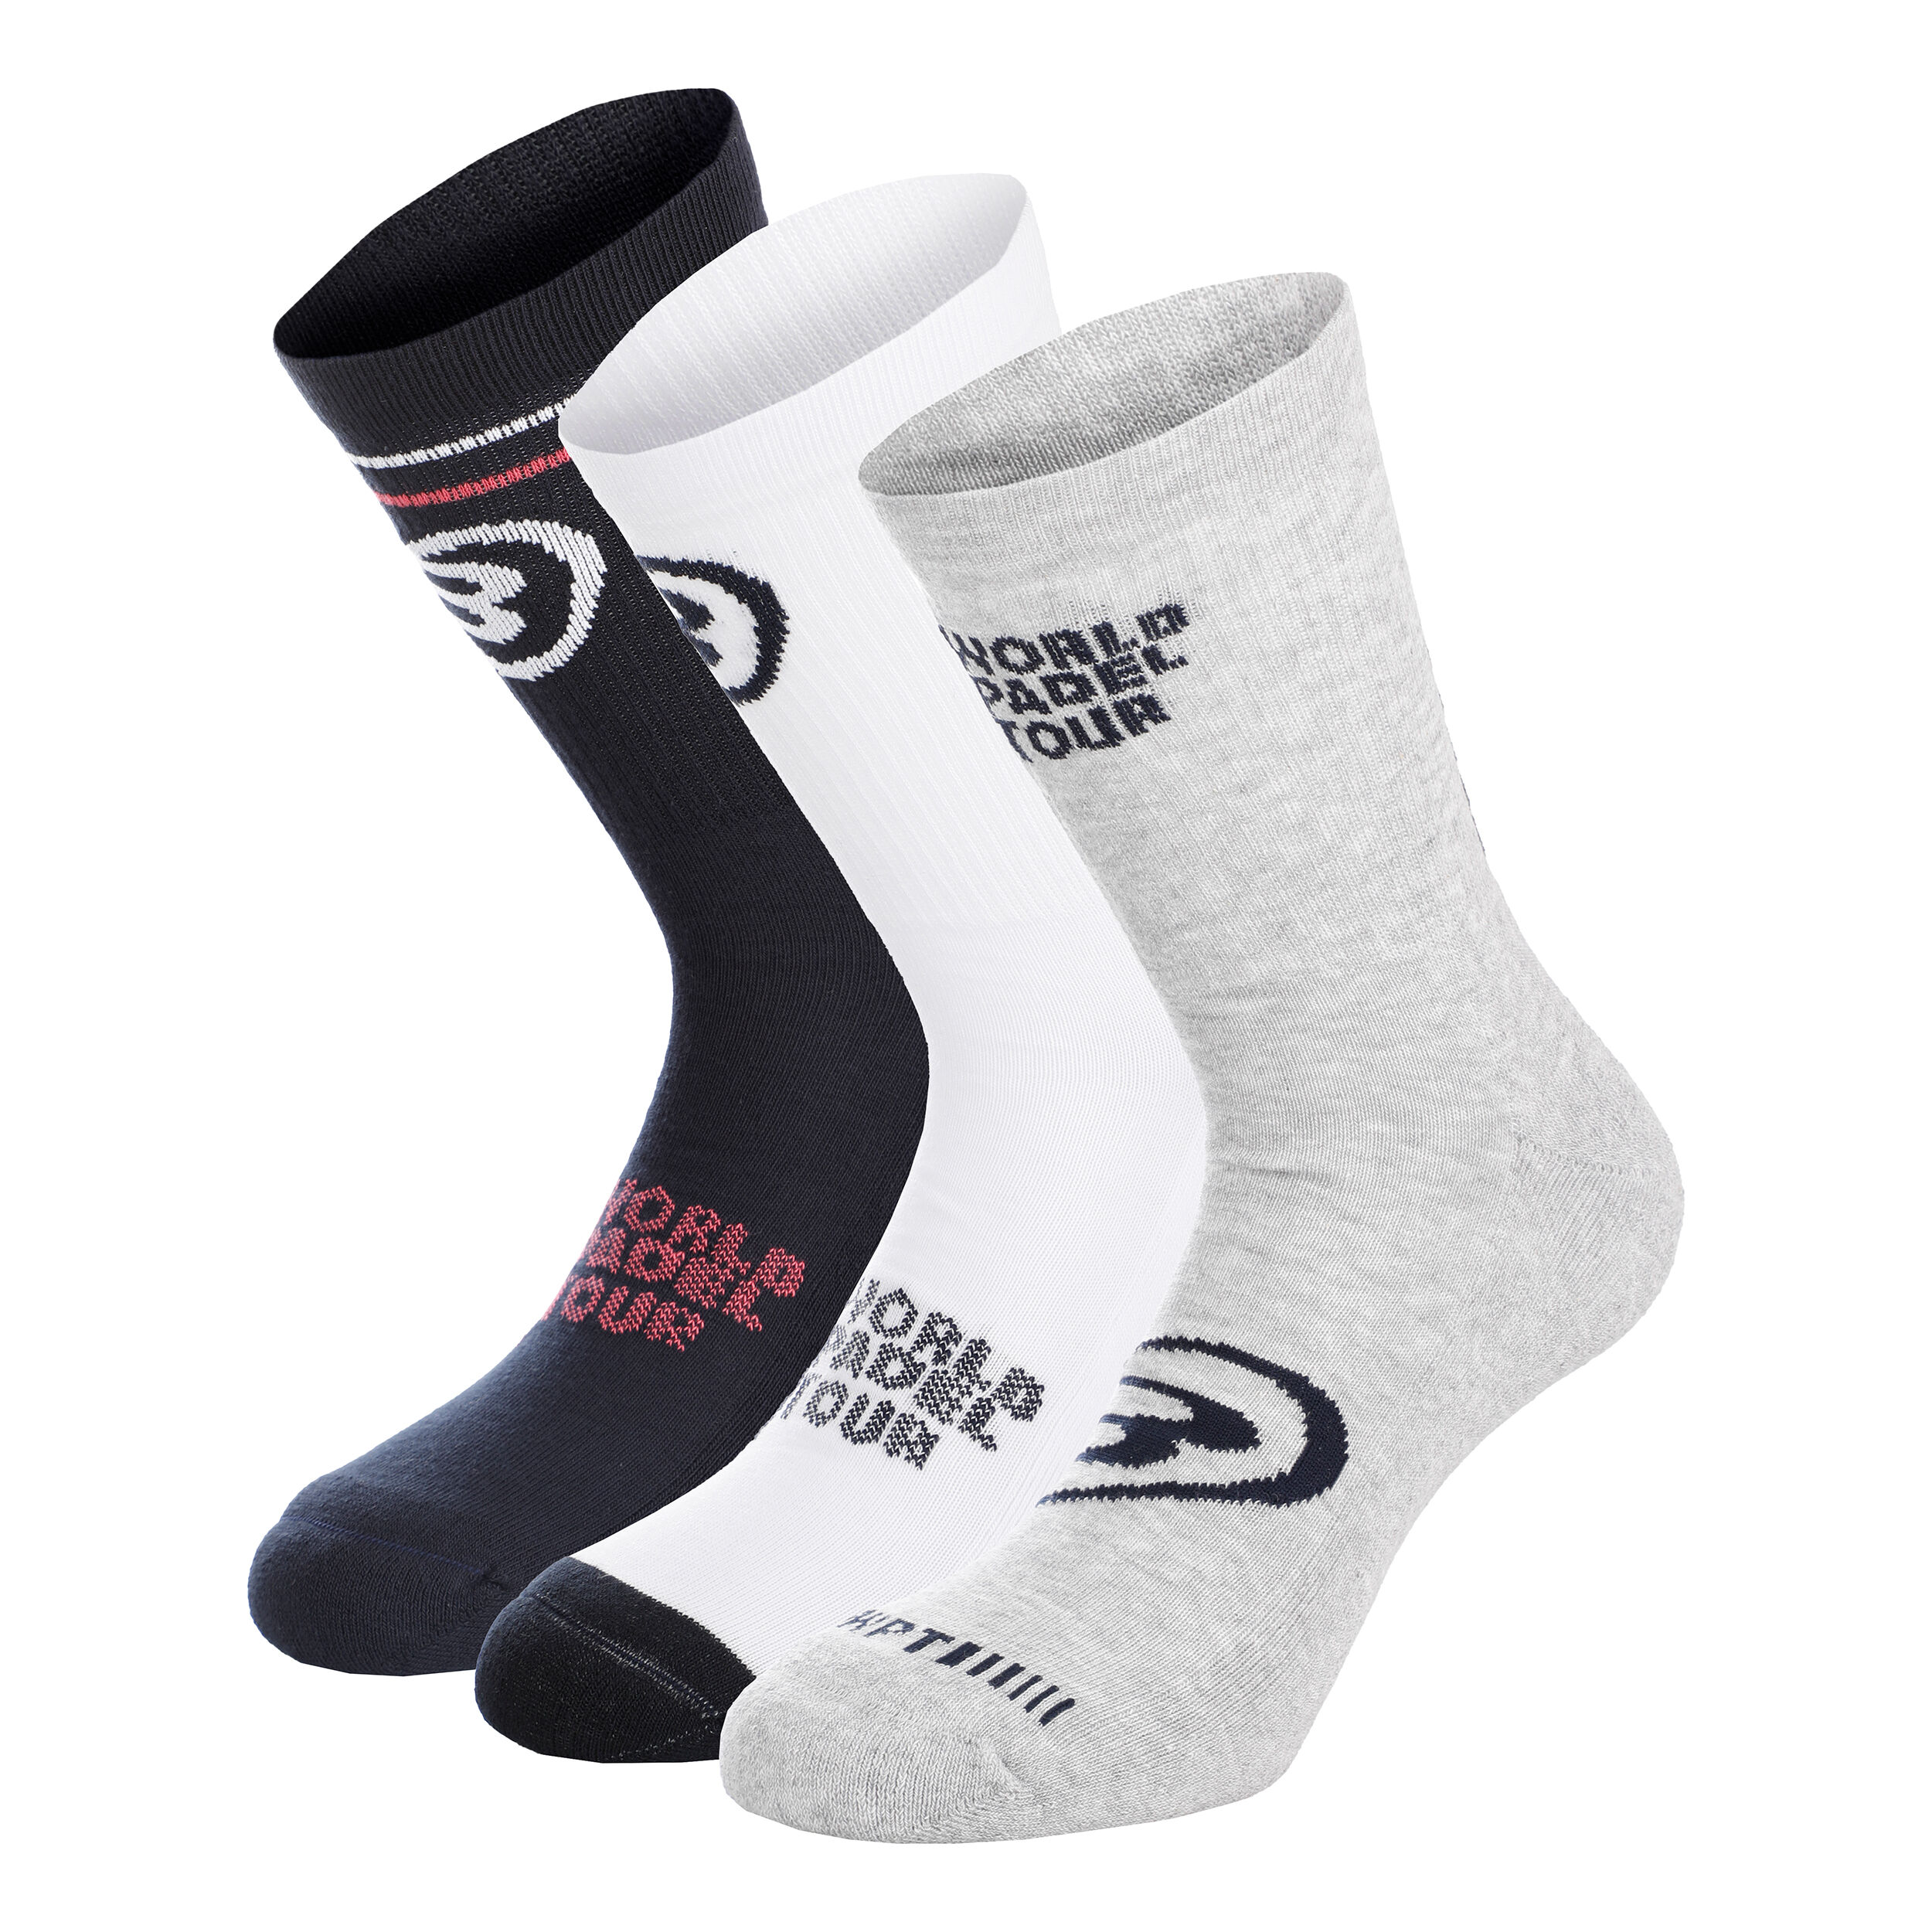 Details about   Erima 3 Pack Sports Socks 2181901 2181902 Tennis Socks White Black New Size 31-50 show original title 